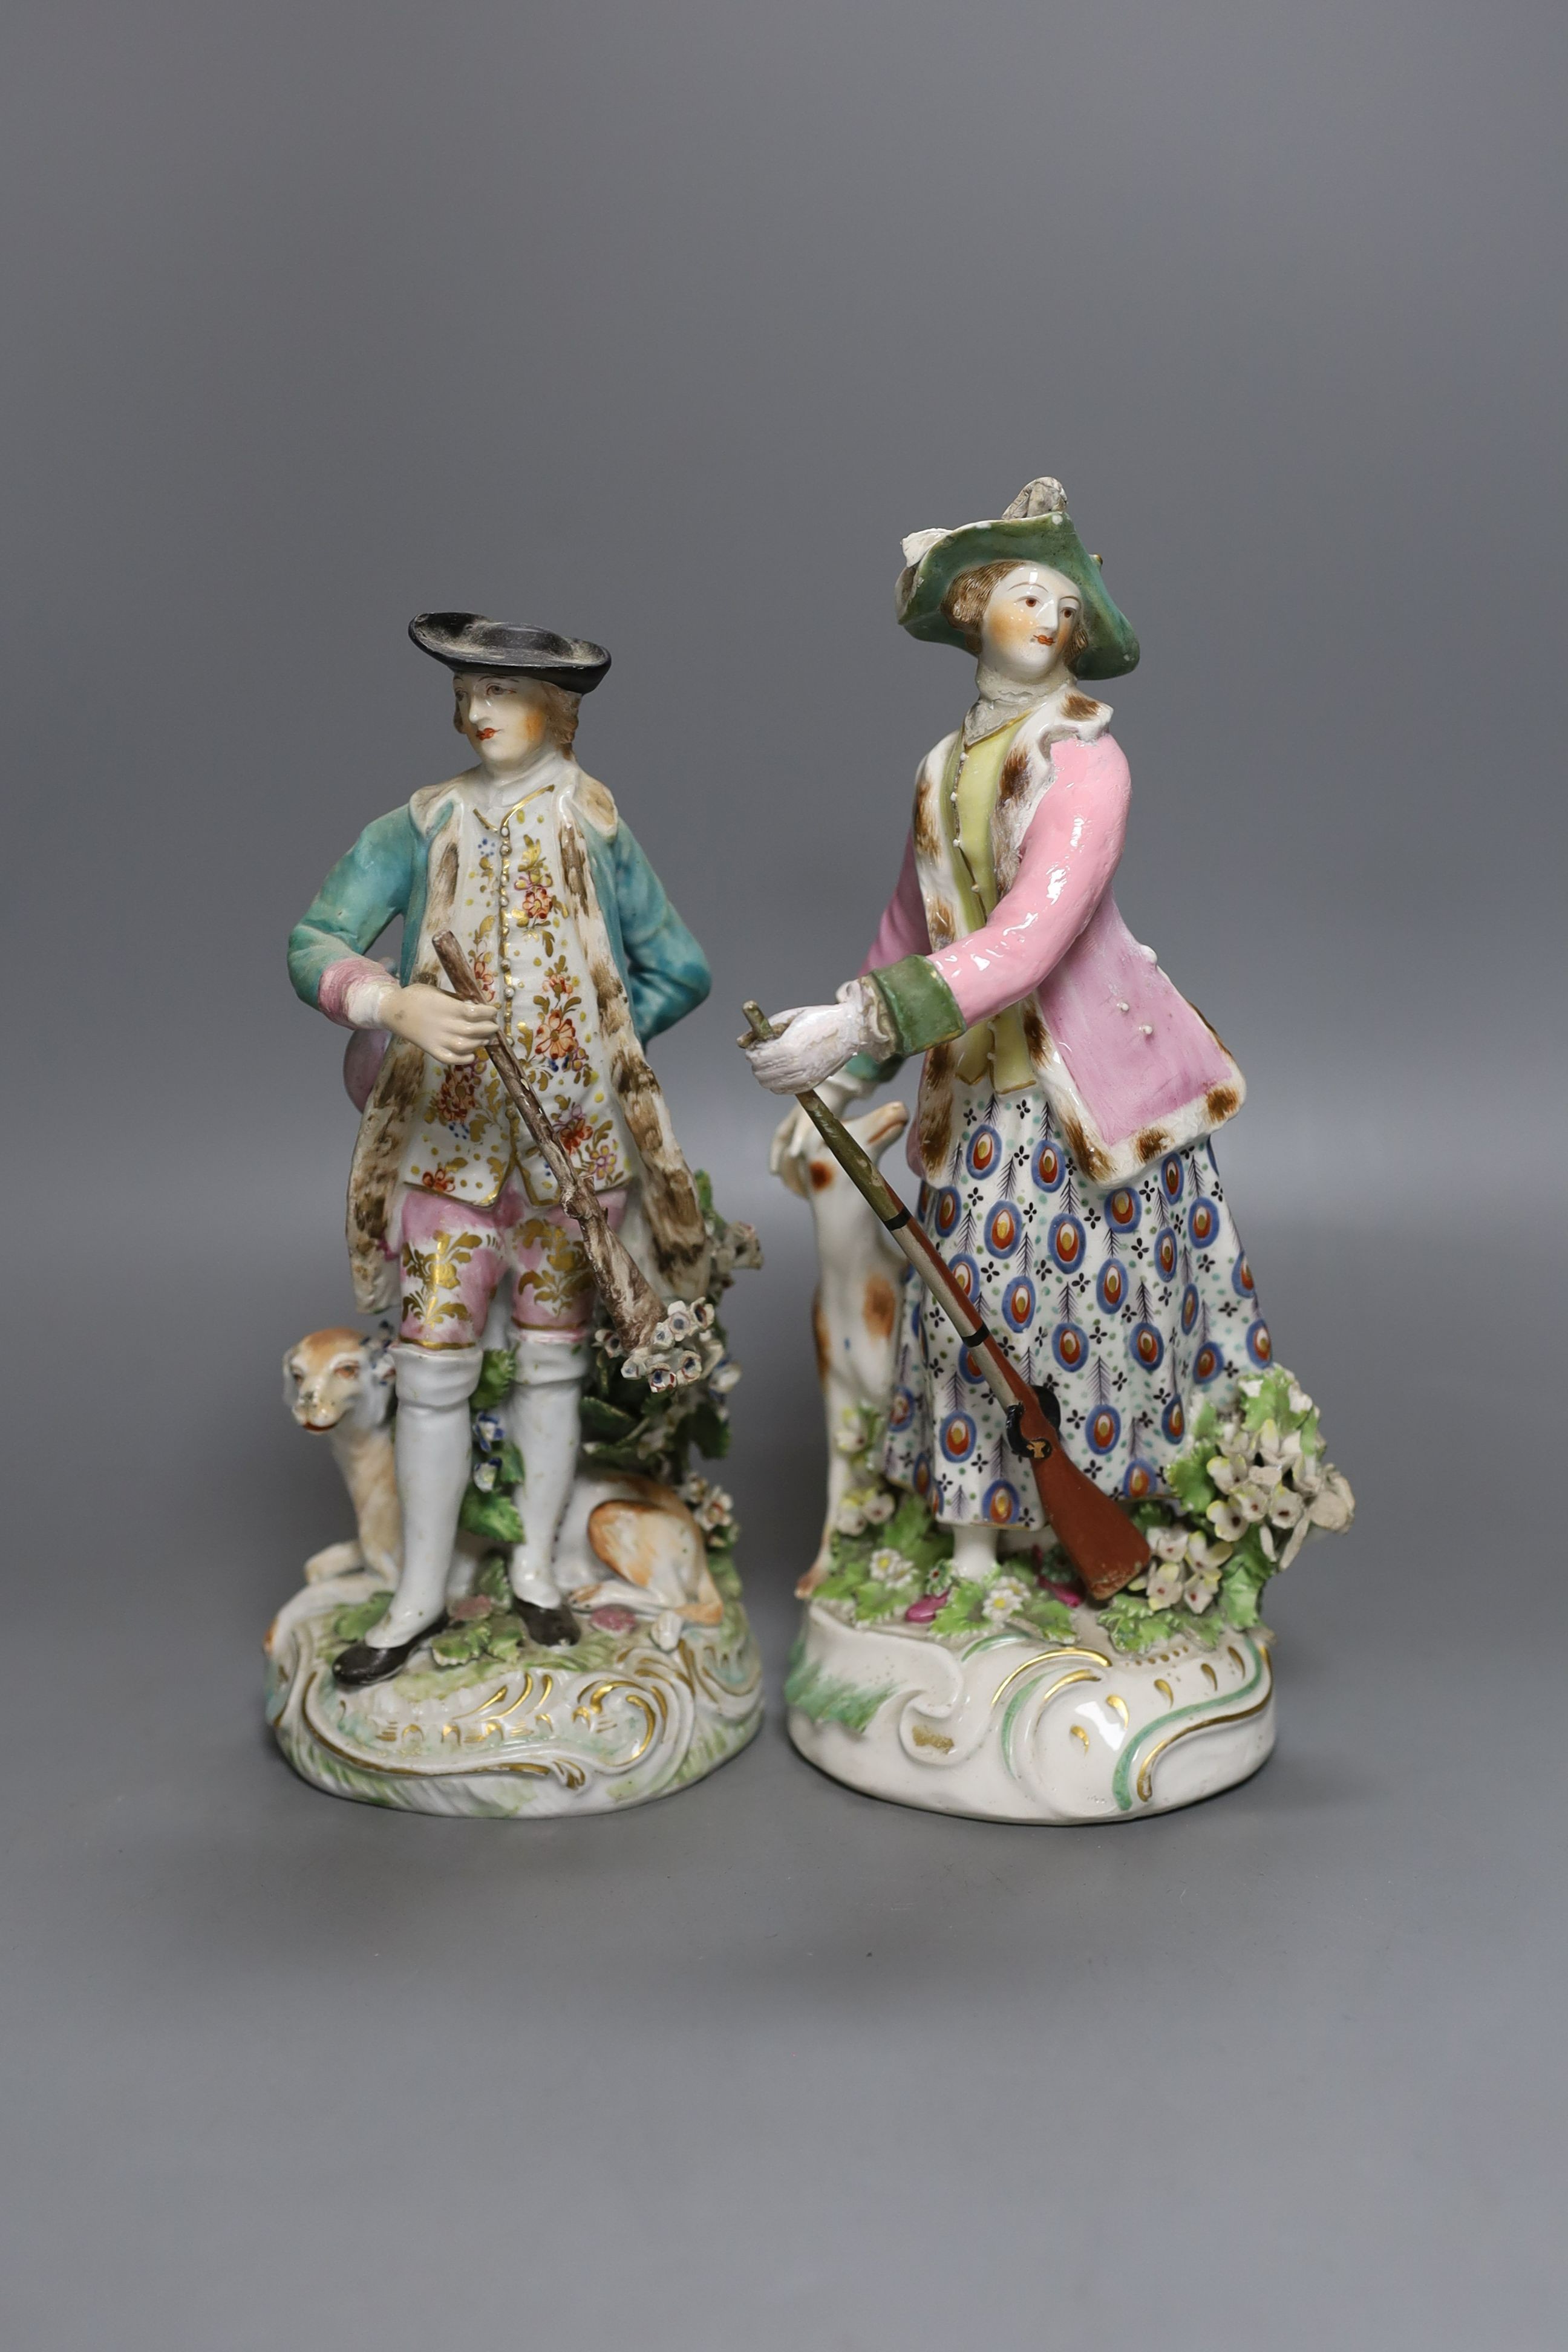 Two Derby figures of a huntsman and huntswoman, c.1765 - tallest 23cm